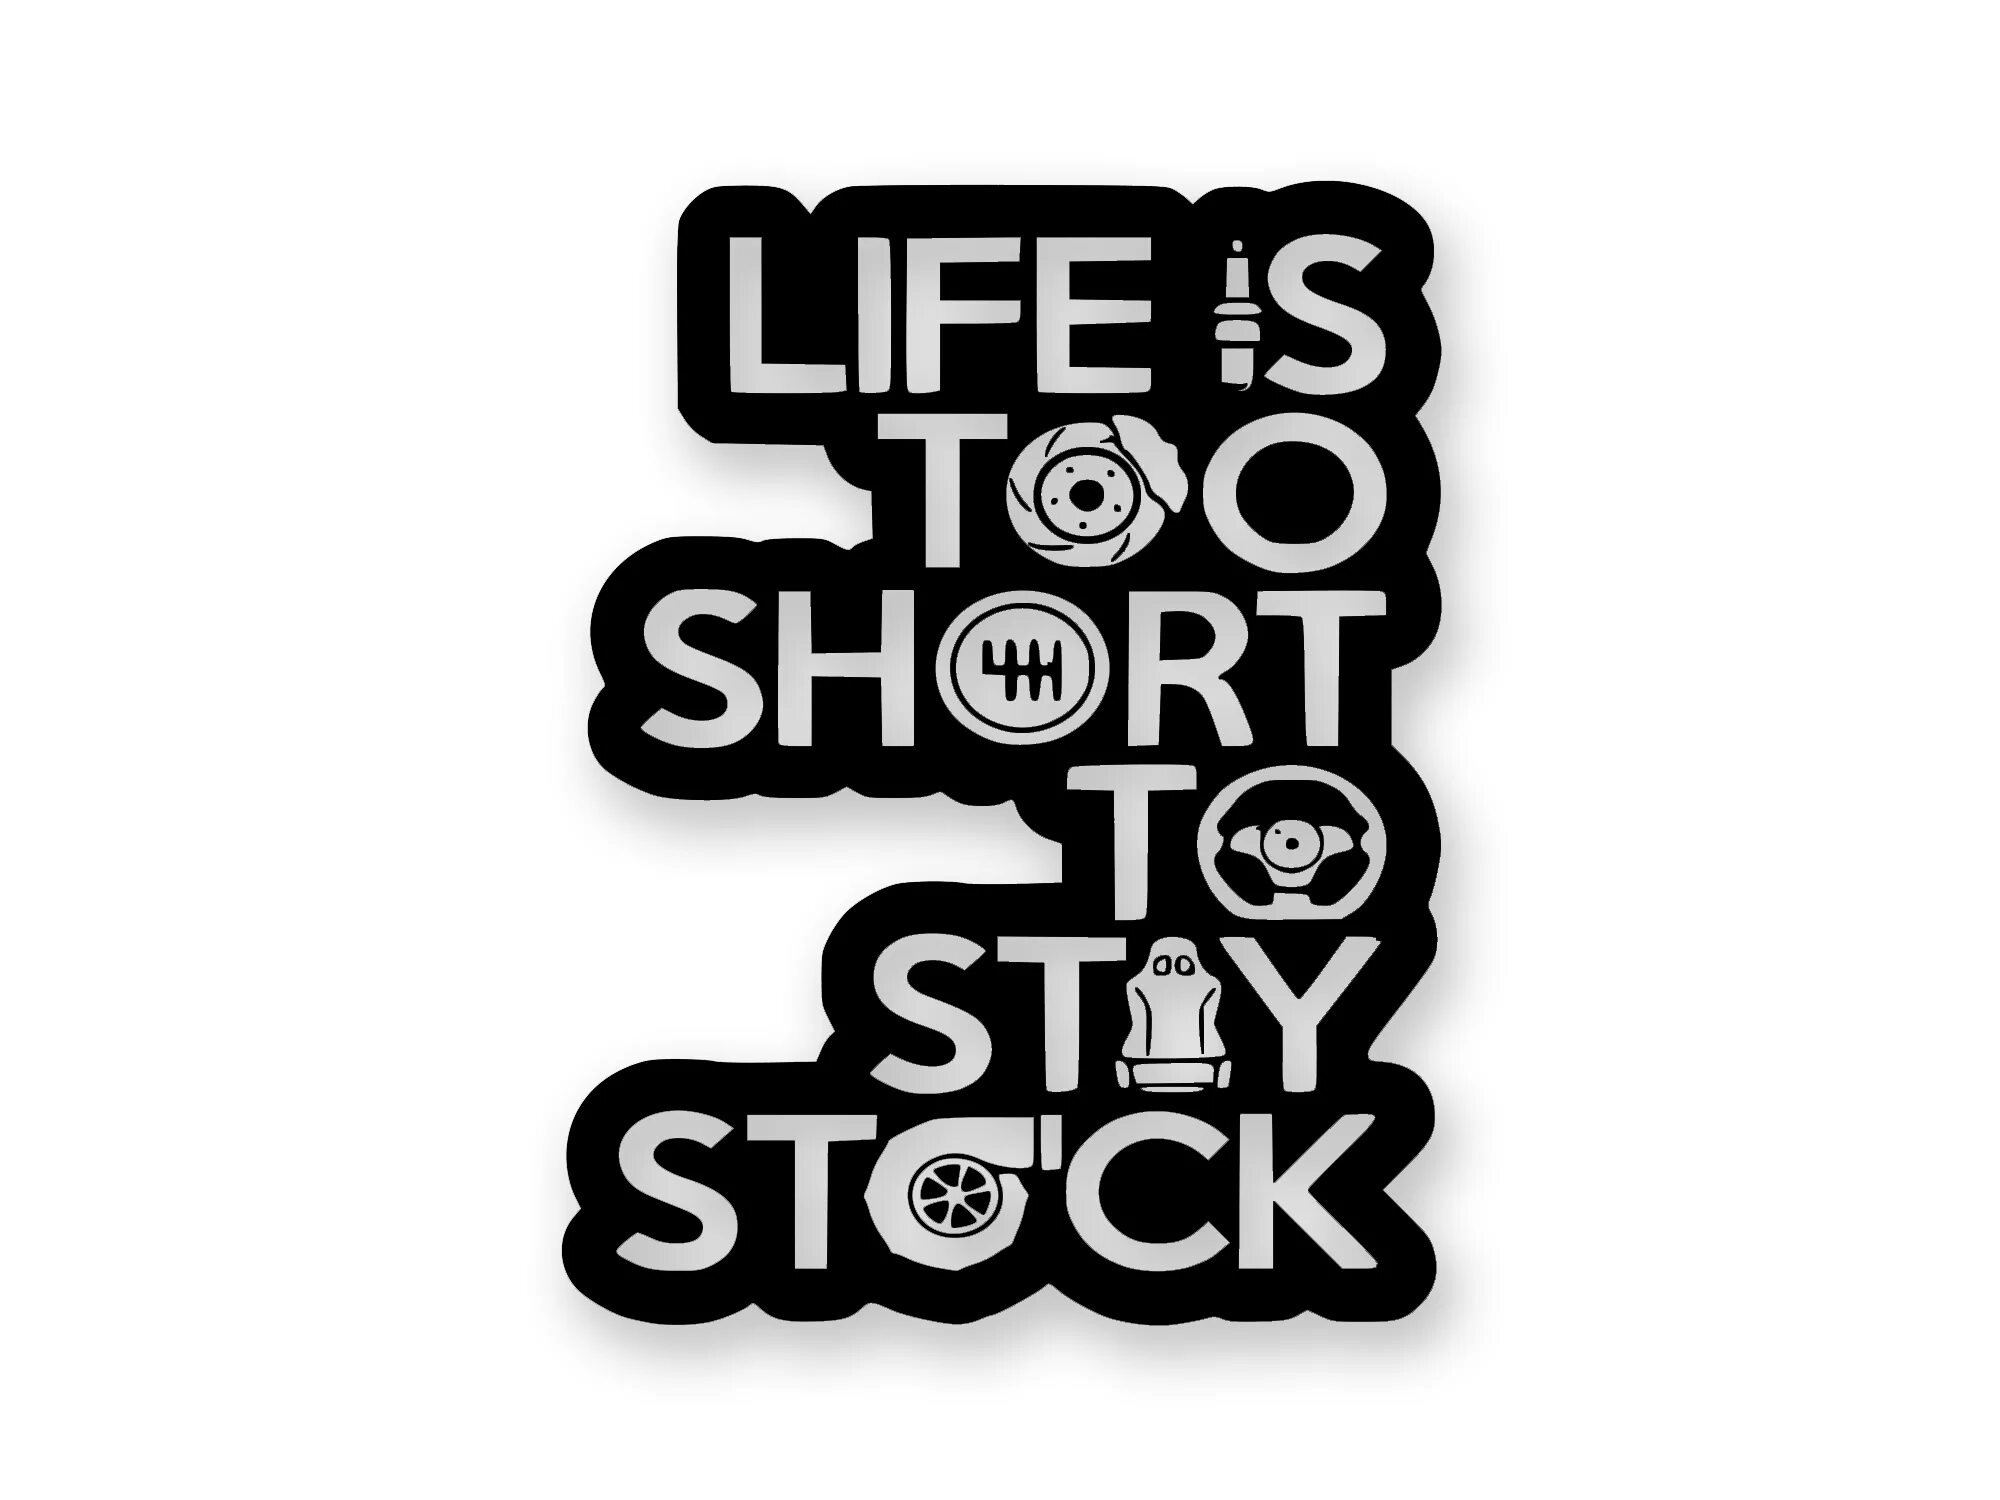 Обои на телефон не ной сука. Мотивирующие обои на телефон. Life is too short to stay stock наклейка на авто. Life is too short to stay stock. Life is too short to wait.